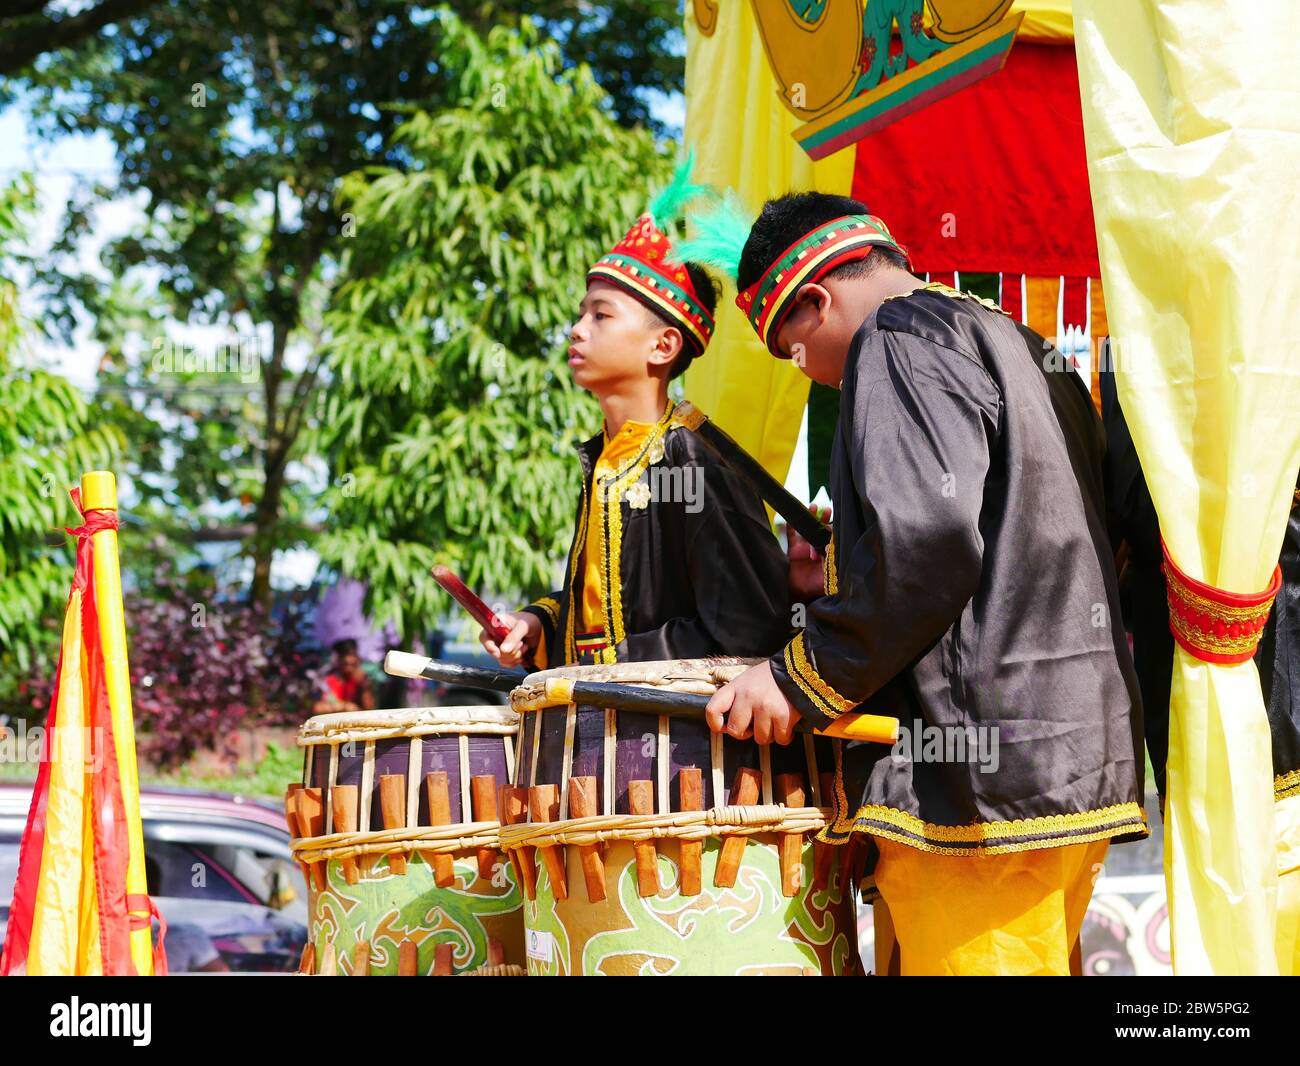 Dec 21, 2019 - Tarakan,Indonesia: Group of musician play rebana or also known as kompang, performing in Nusantara cultural parade Stock Photo